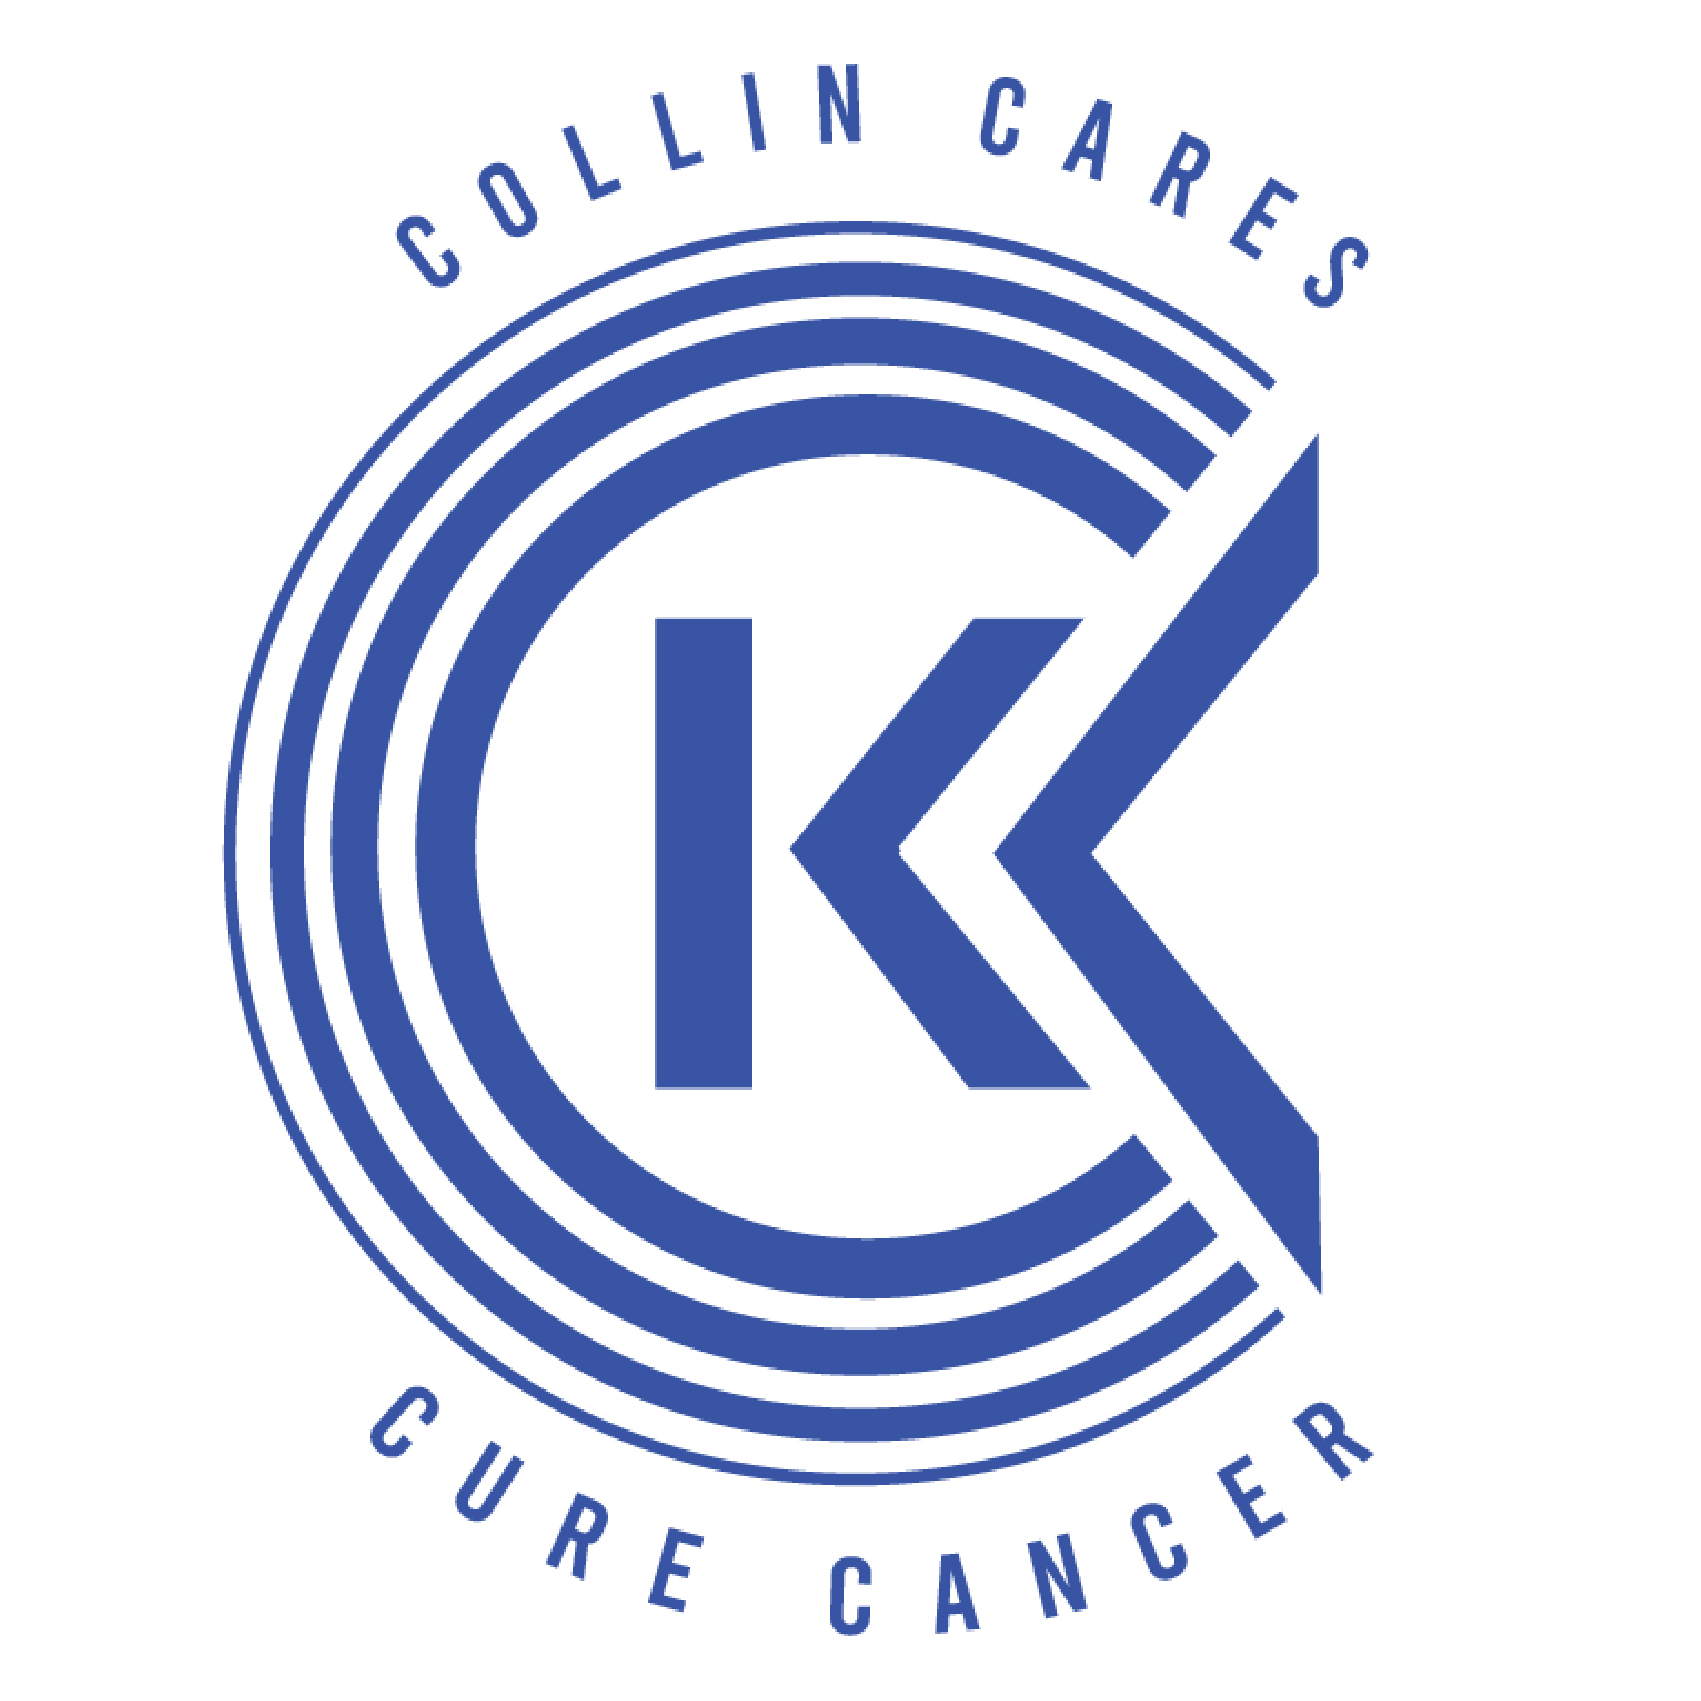 Collin Cares Cure Cancer Hertvik Insurance Group Medina OH